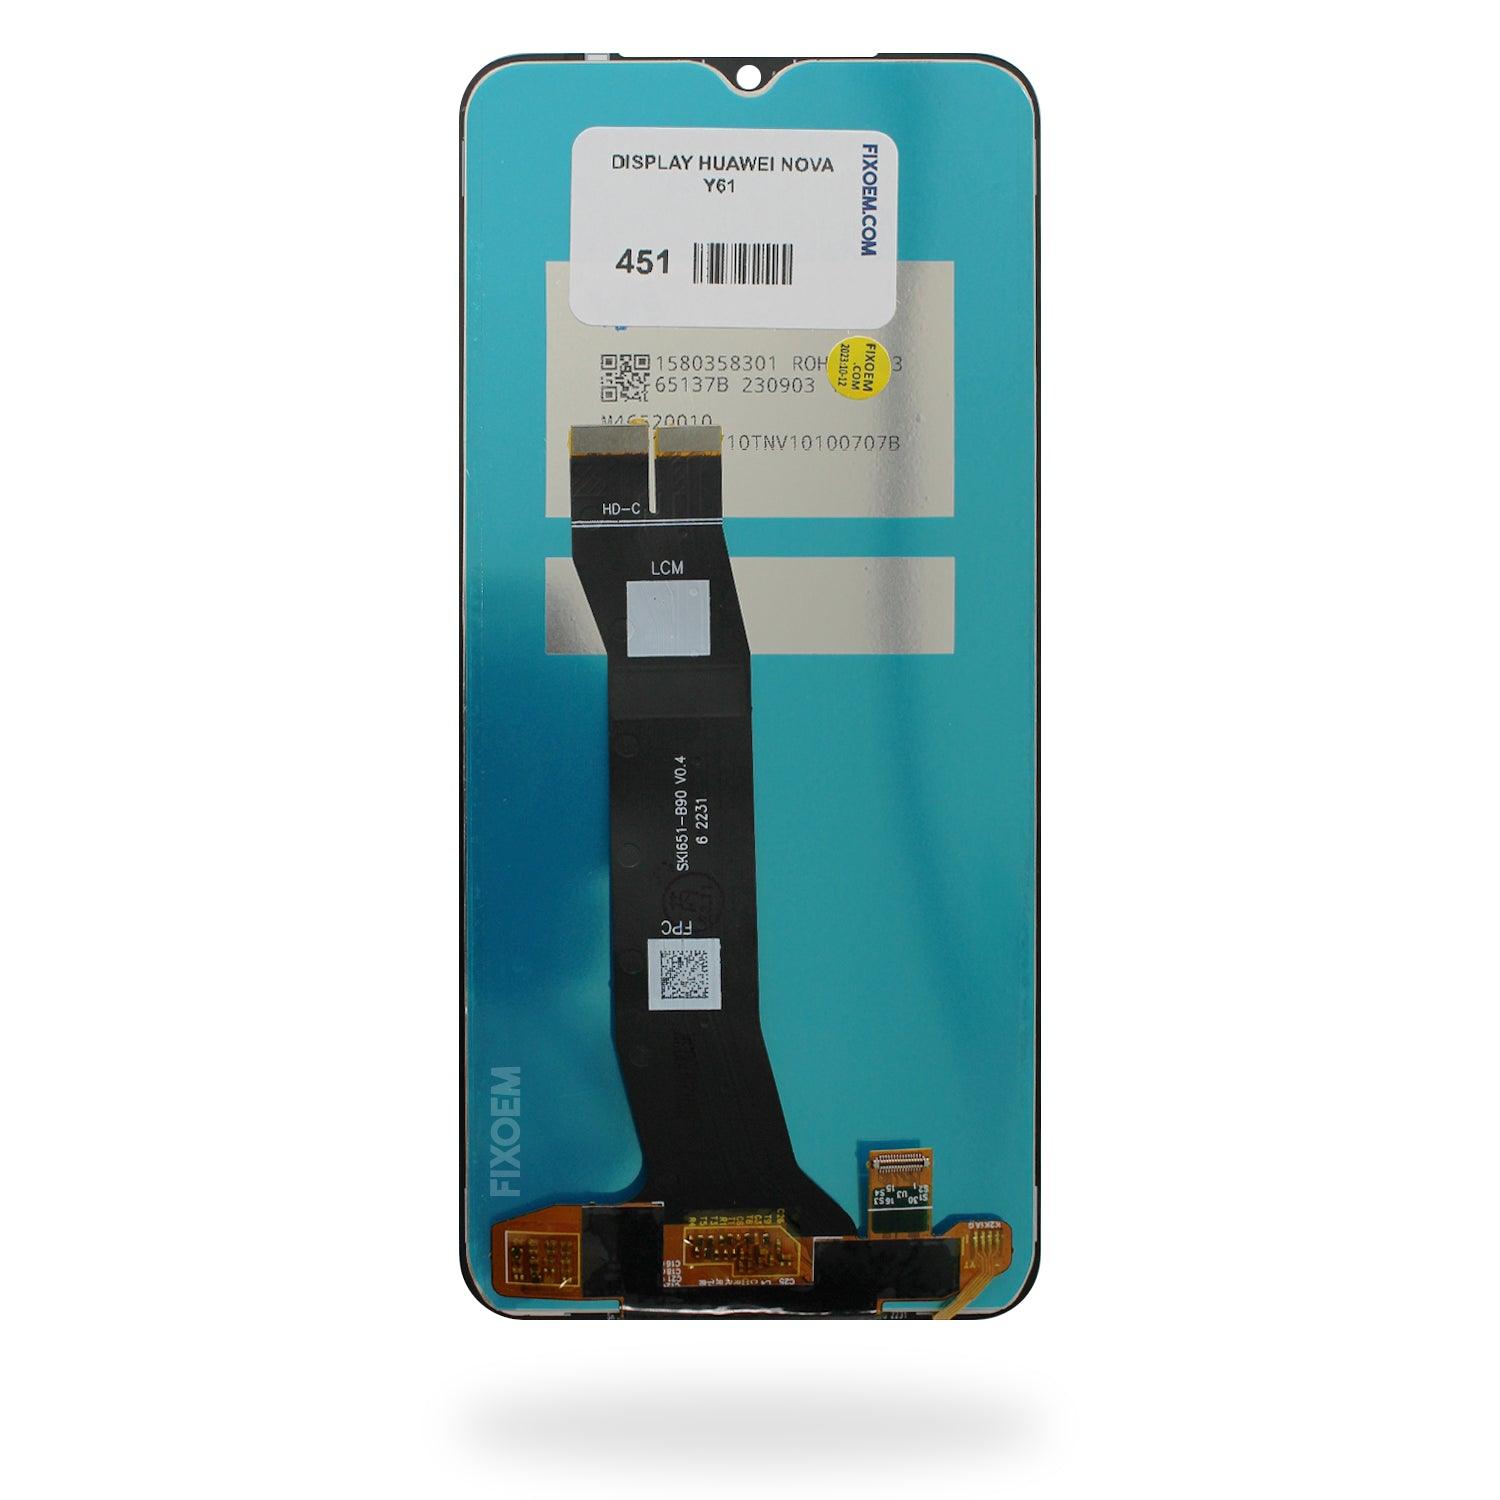 Display Huawei Nova Y61 IPS Eve-lx9 Eve-lx9n Eve-lx3 a solo $ 210.00 Refaccion y puestos celulares, refurbish y microelectronica.- FixOEM